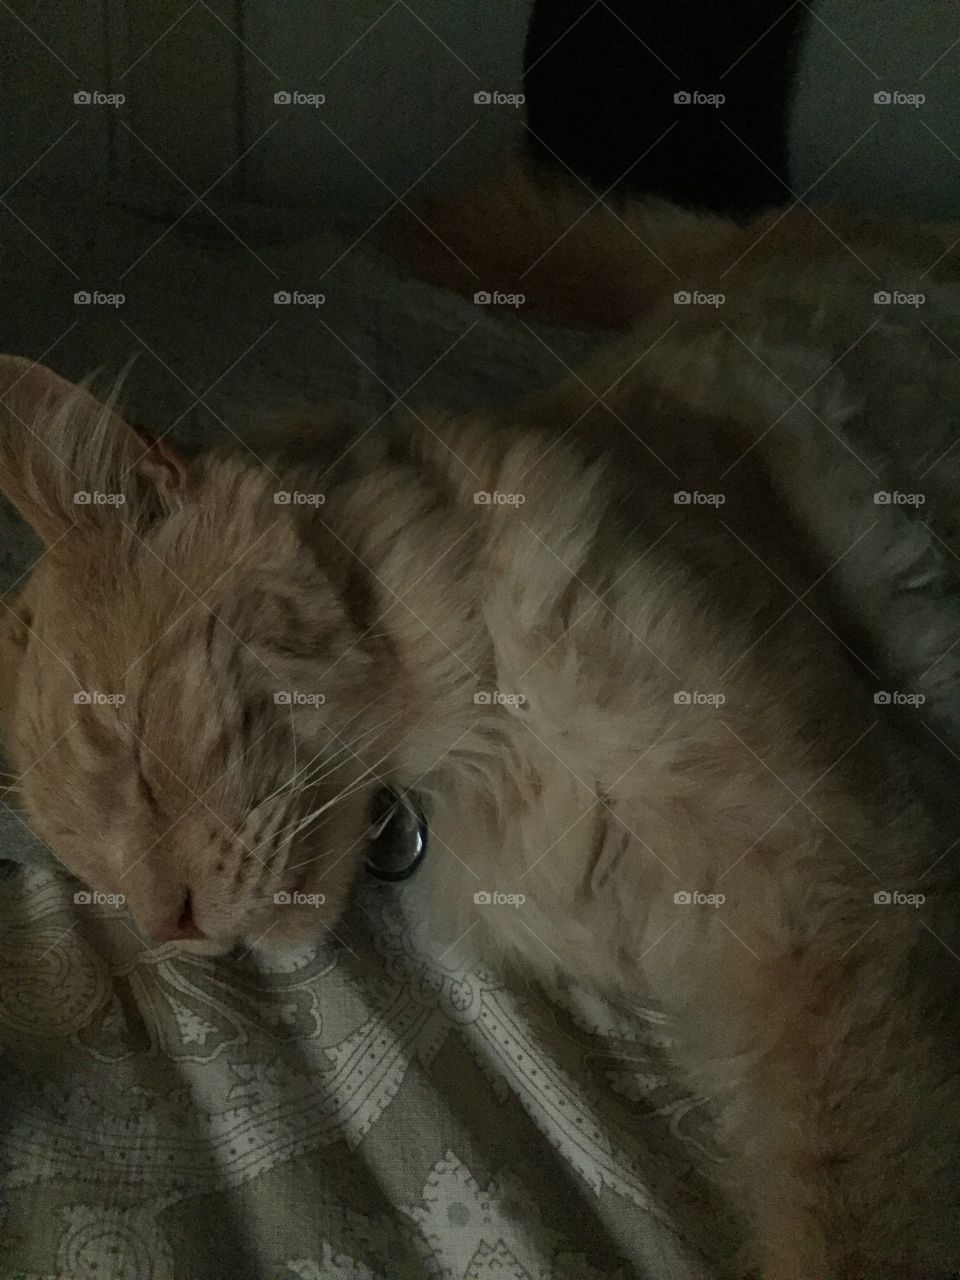 Sleepy monster cat, good friend sleeping 